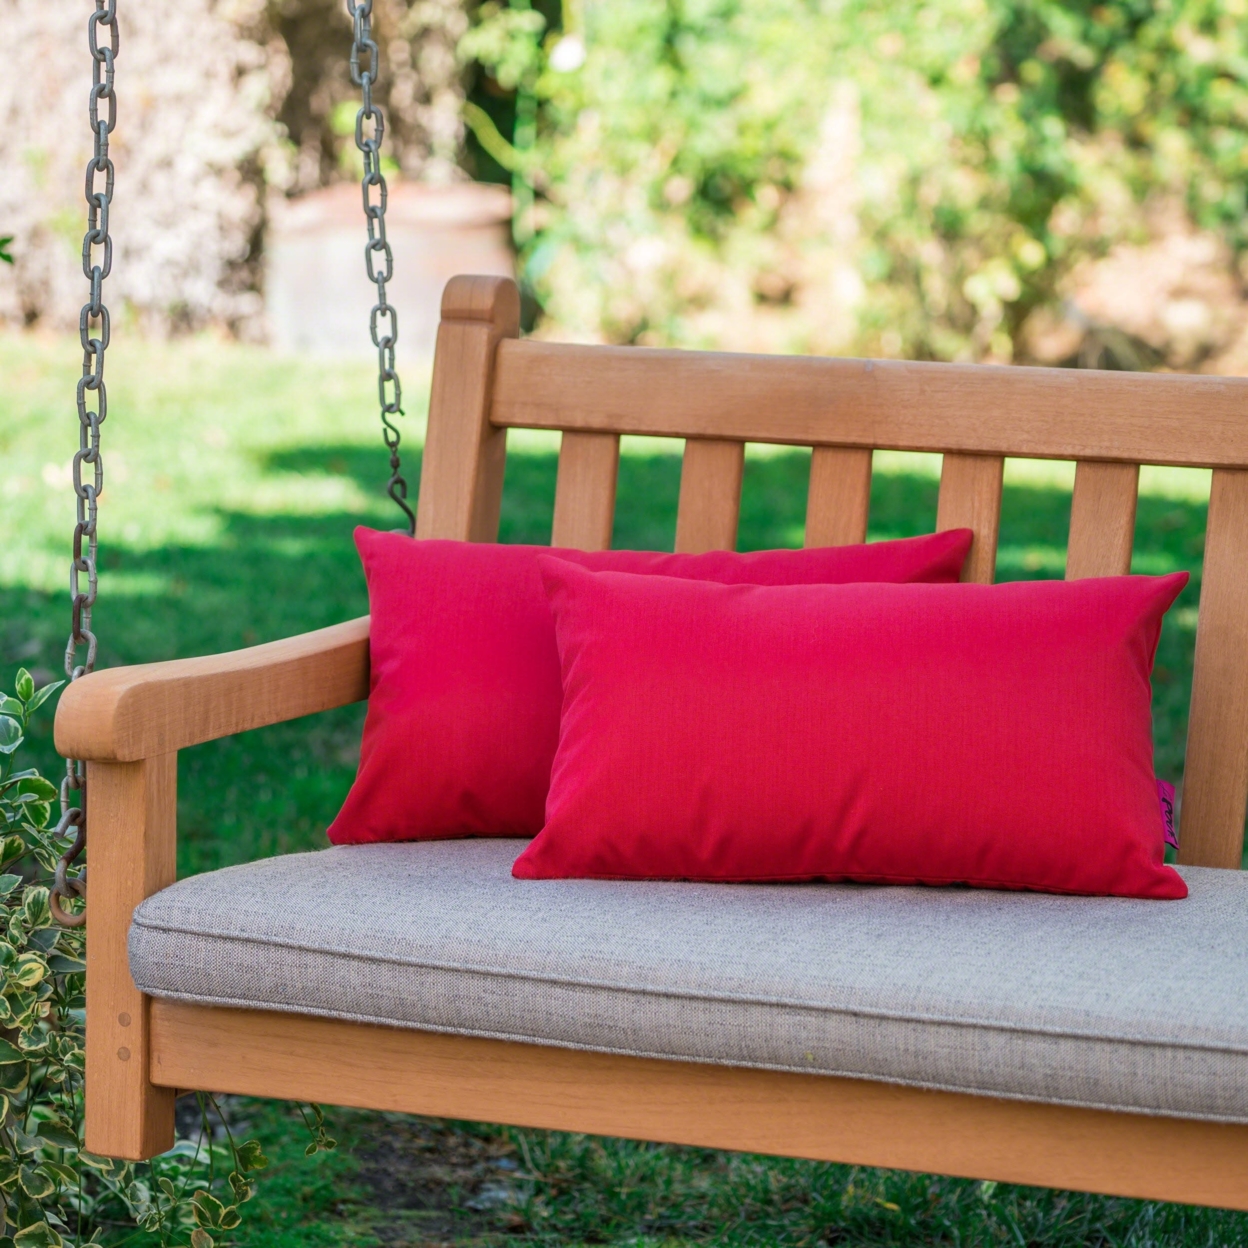 Coronado Outdoor Red Water Resistant Rectangular Throw Pillow - Red, Single